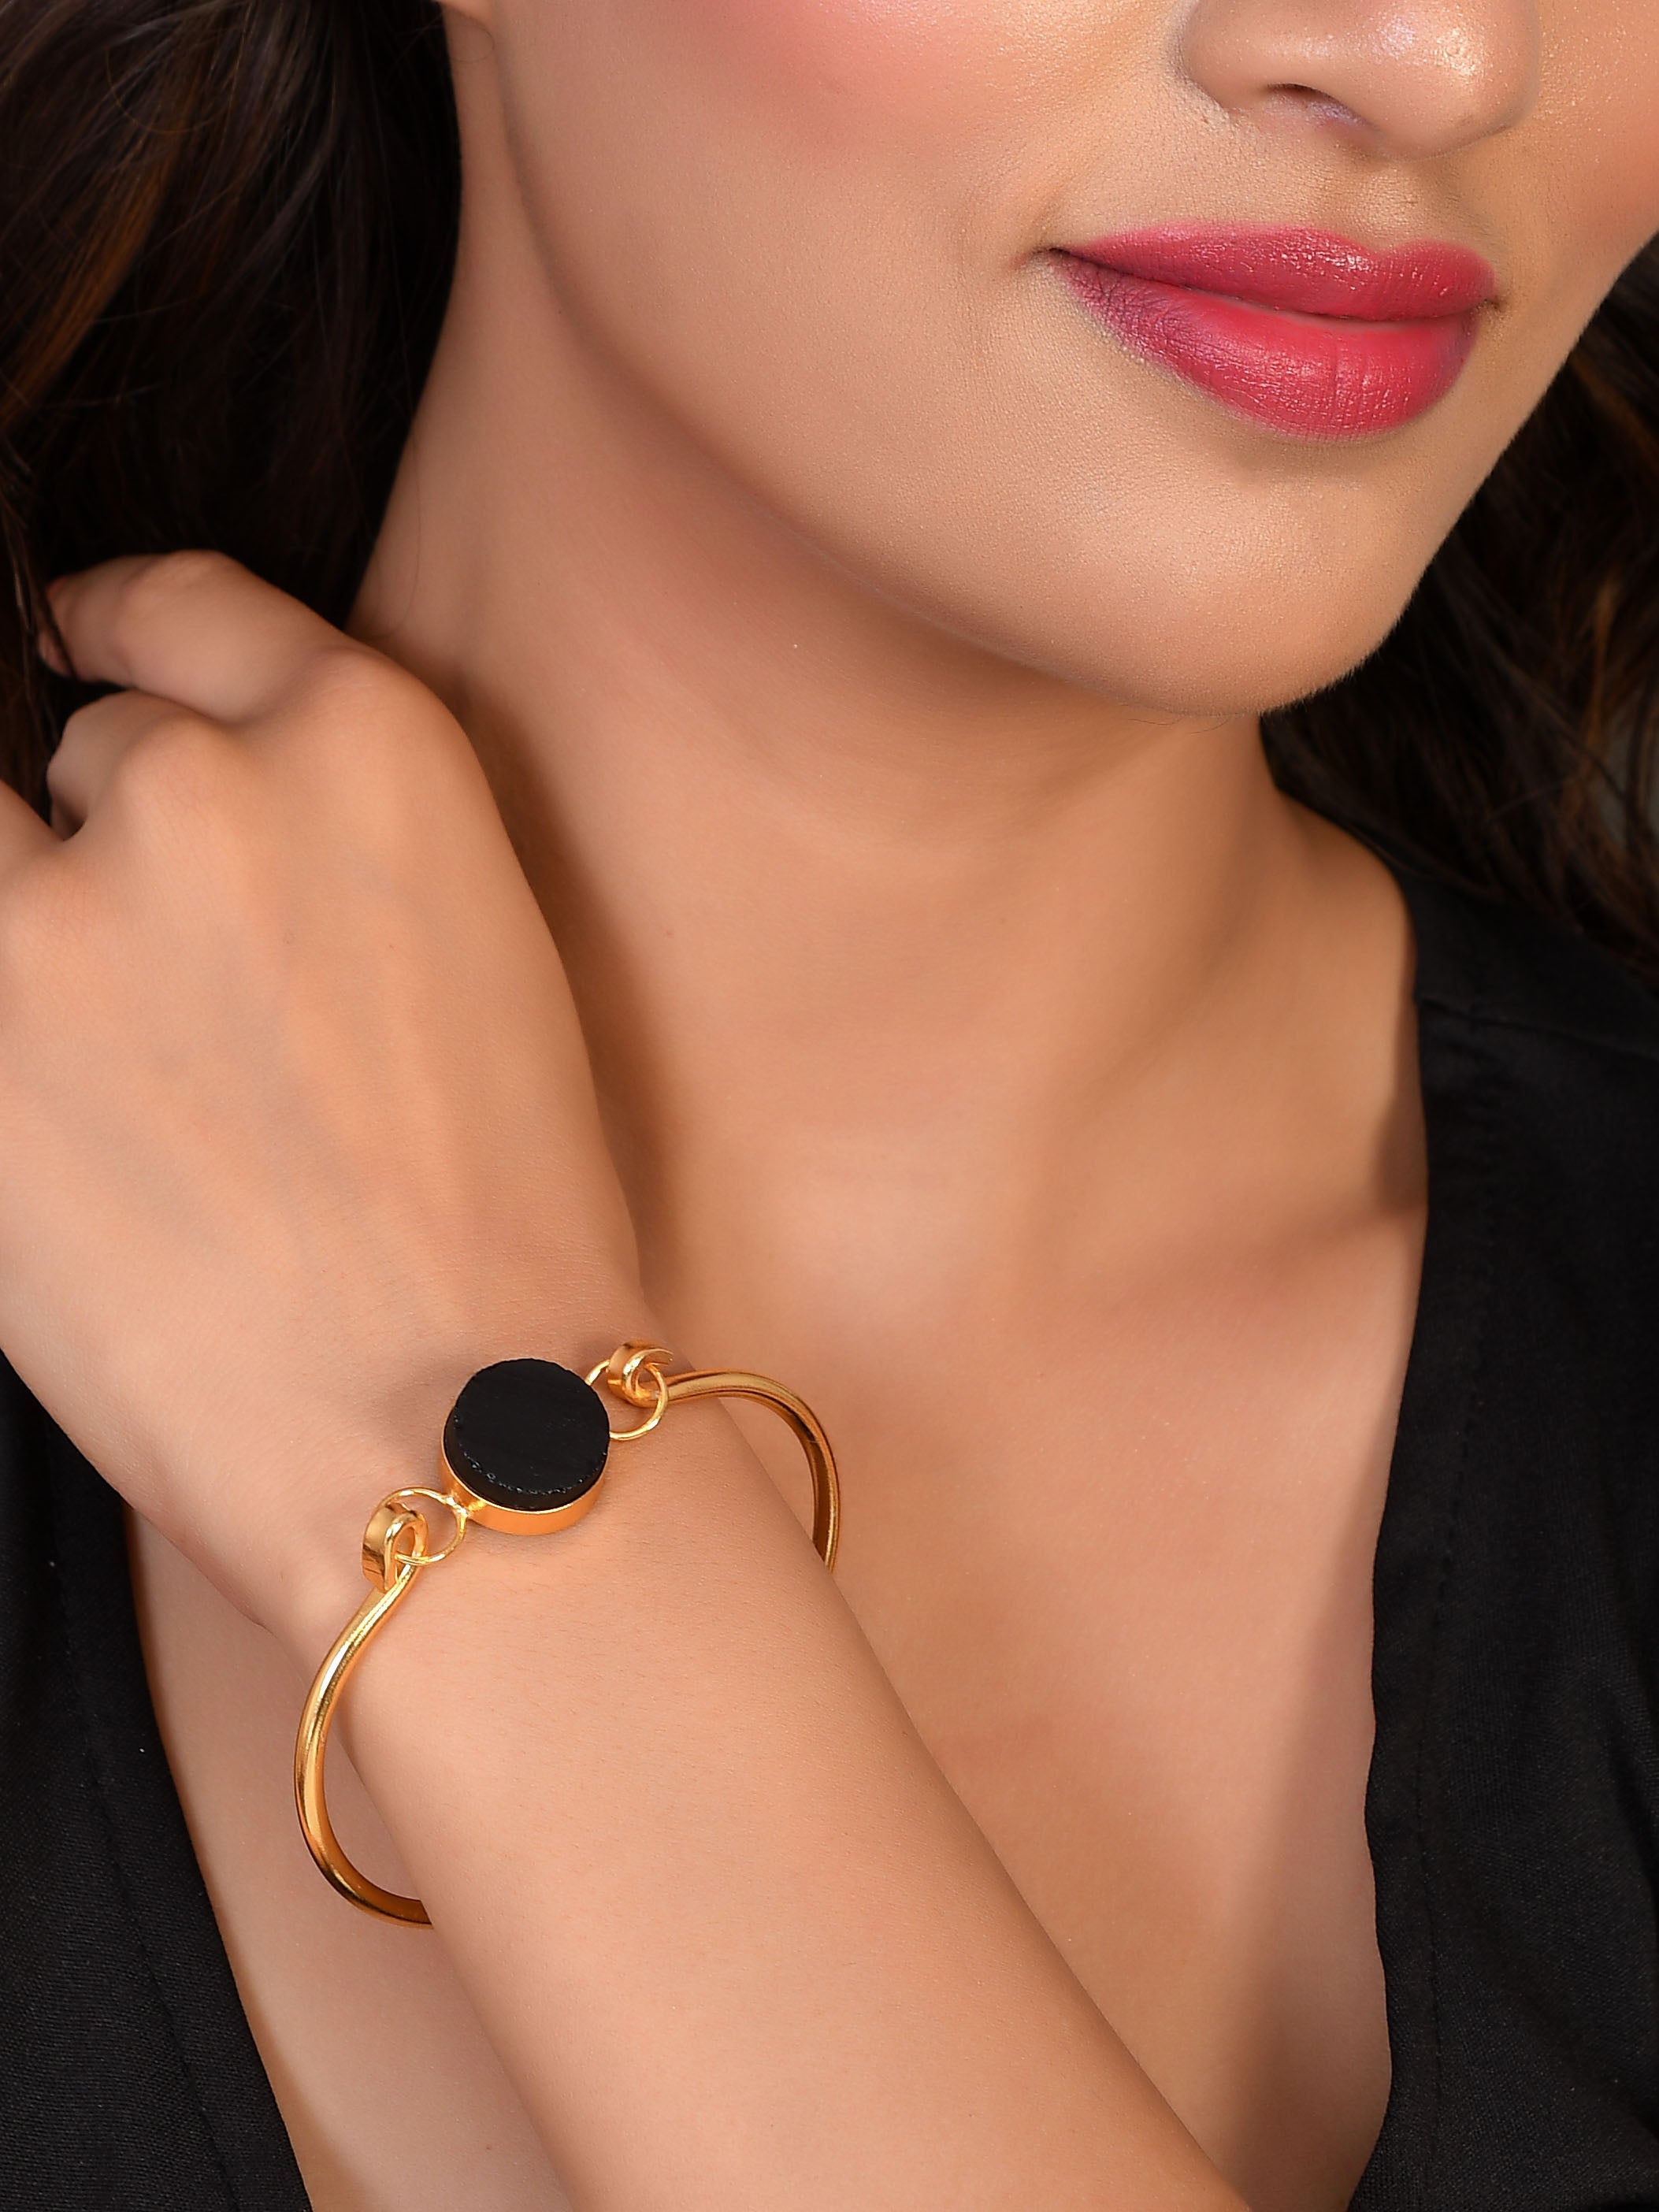 Buy quality 22 carat gold ladies kada bracelet RH-LB948 in Ahmedabad